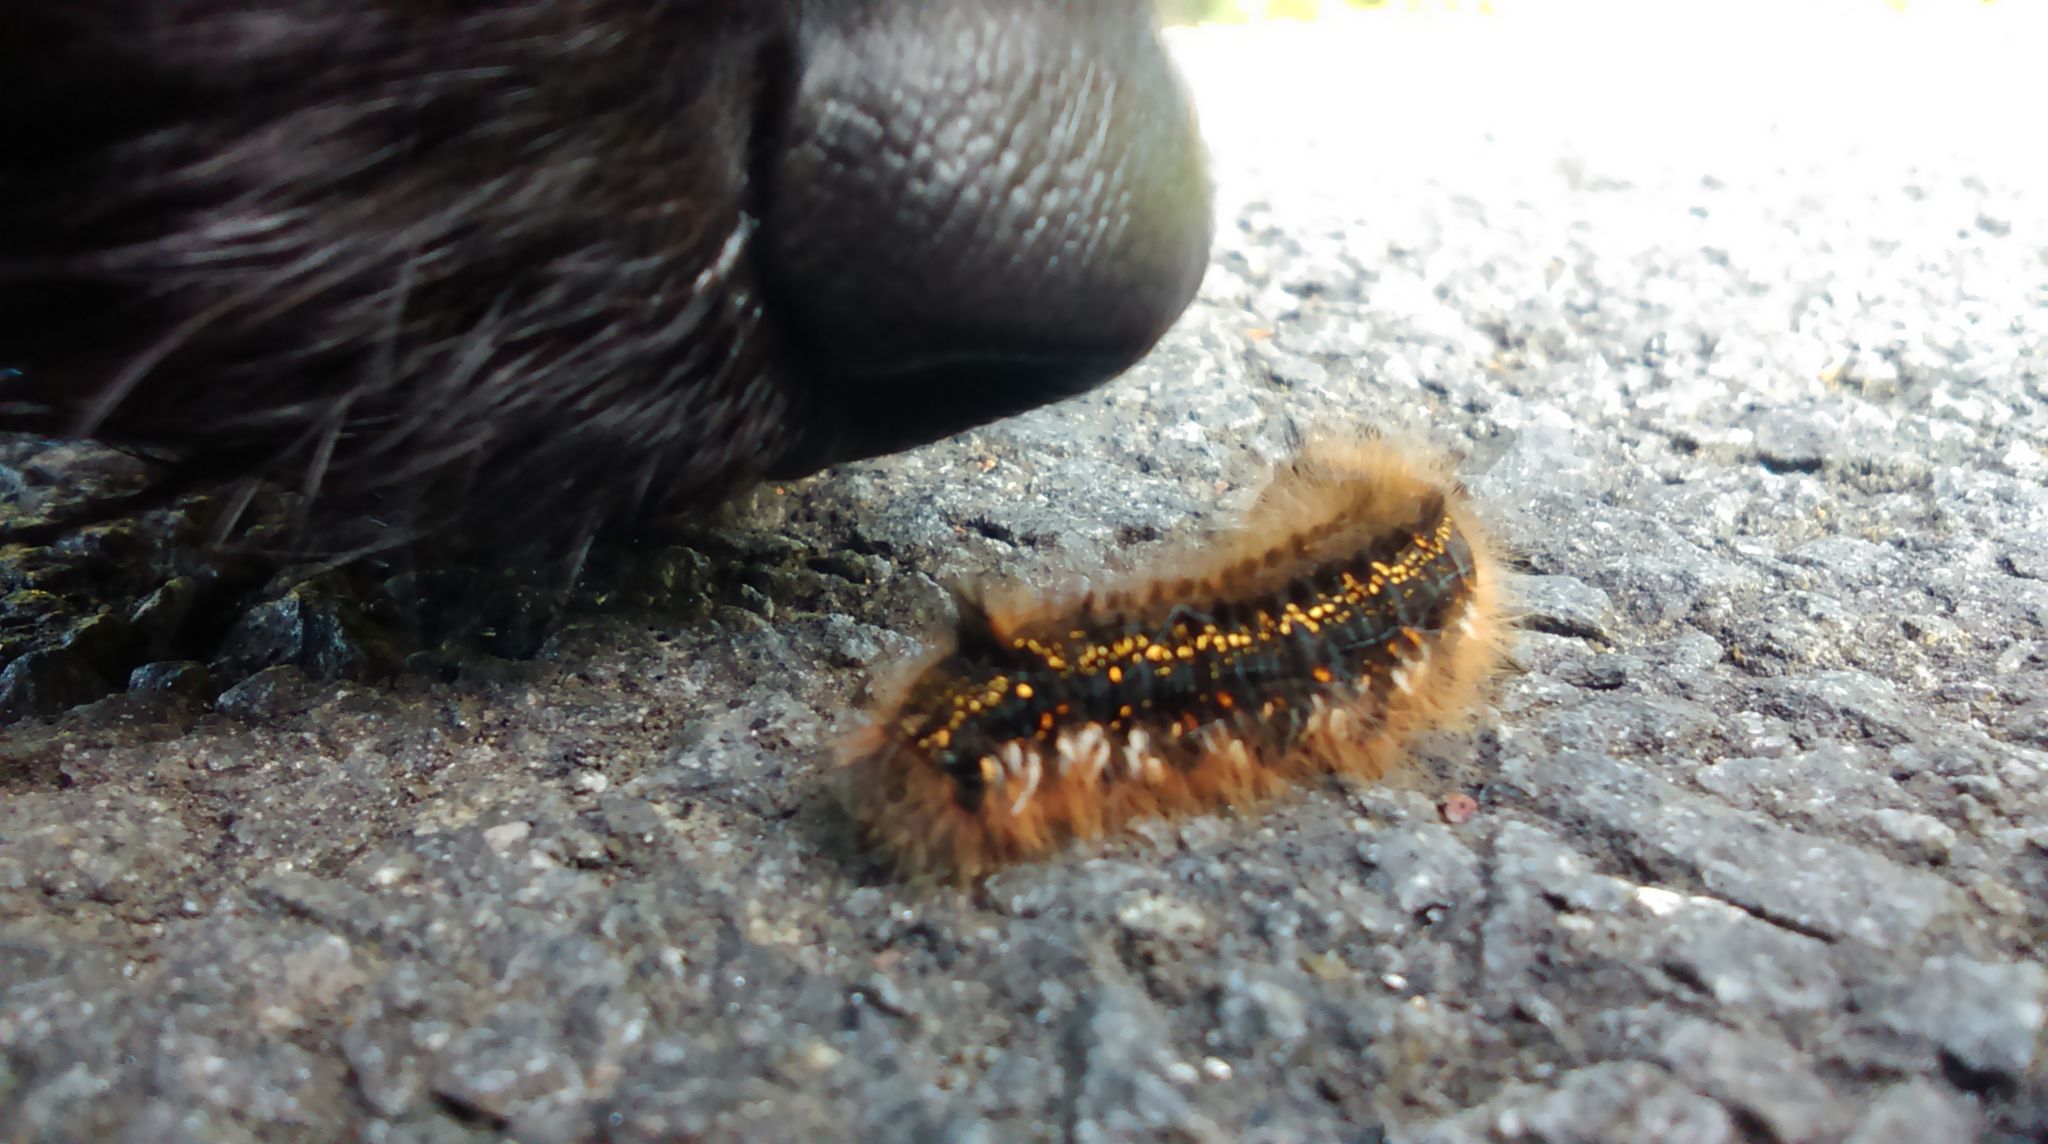 Dog's nose sniffing caterpillar